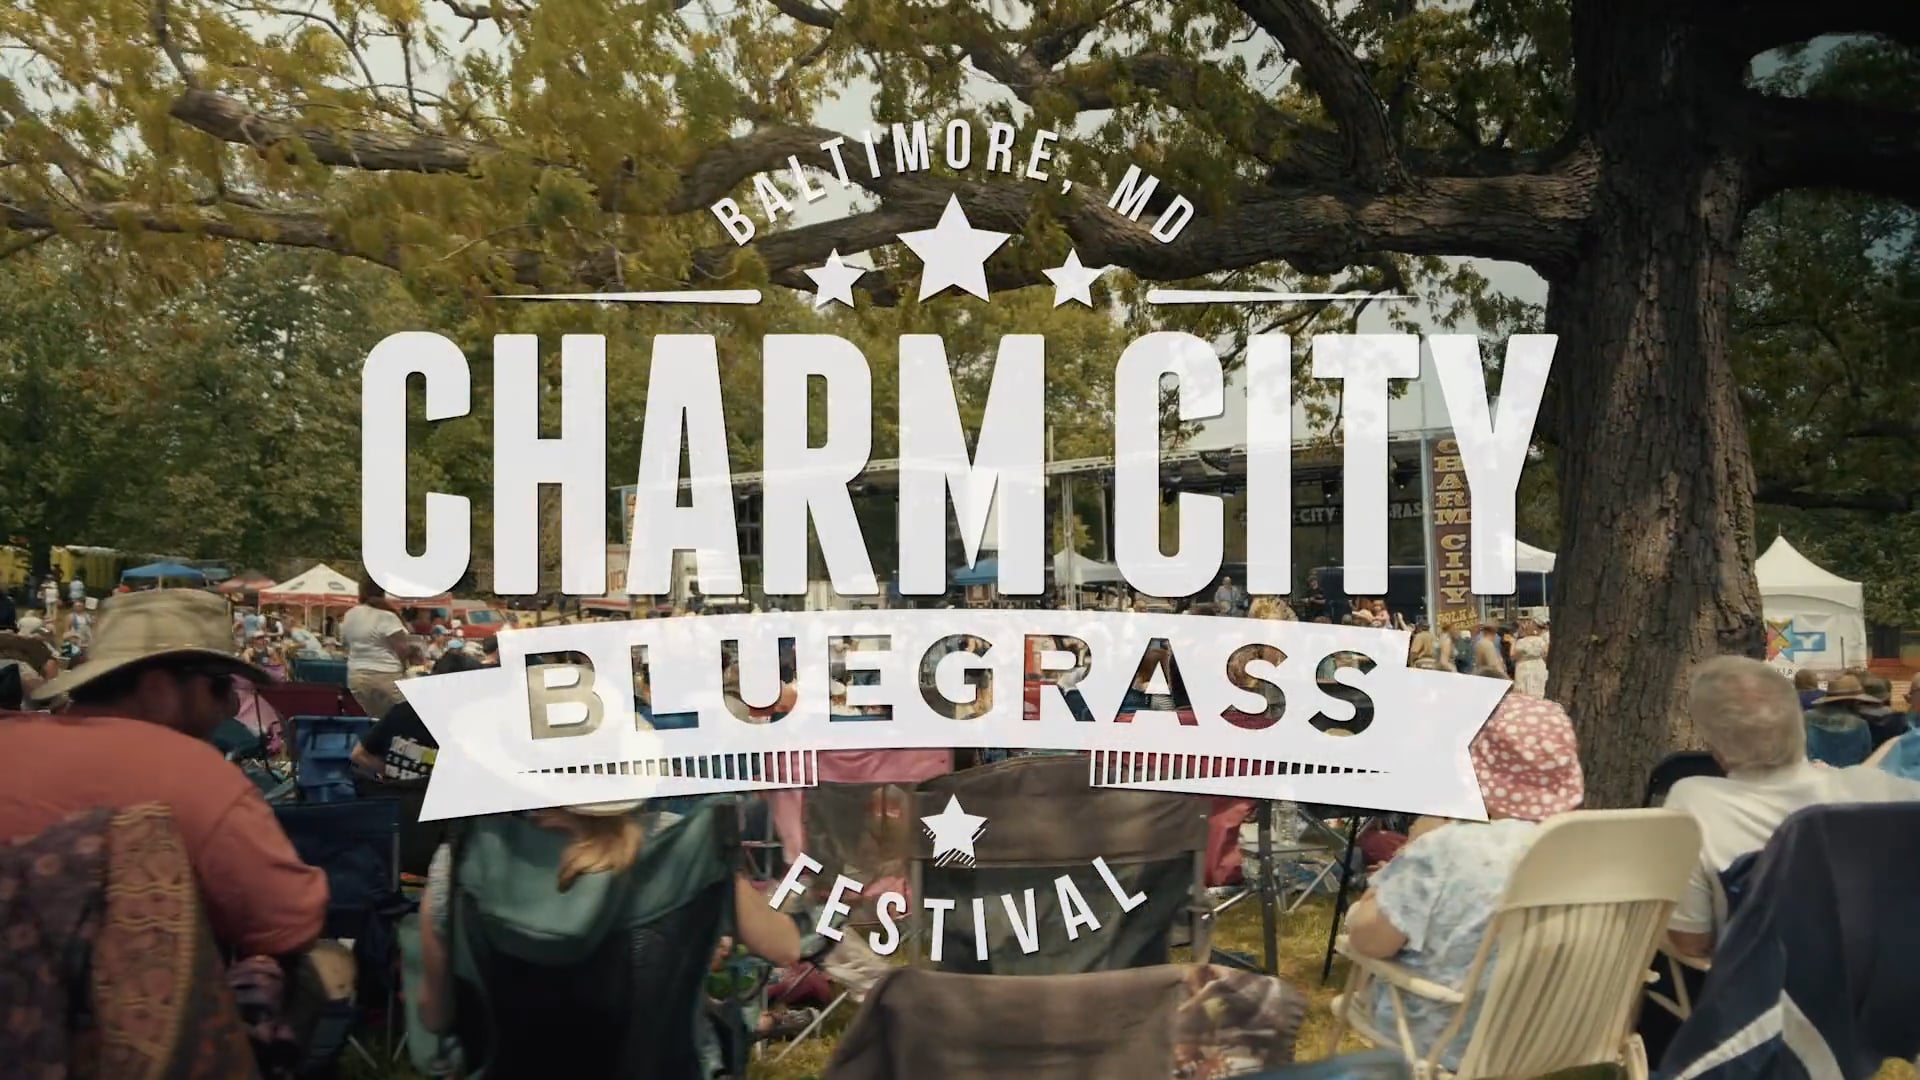 Charm City Bluegrass Festival "Bluegrass In Baltimore" Trailer on Vimeo